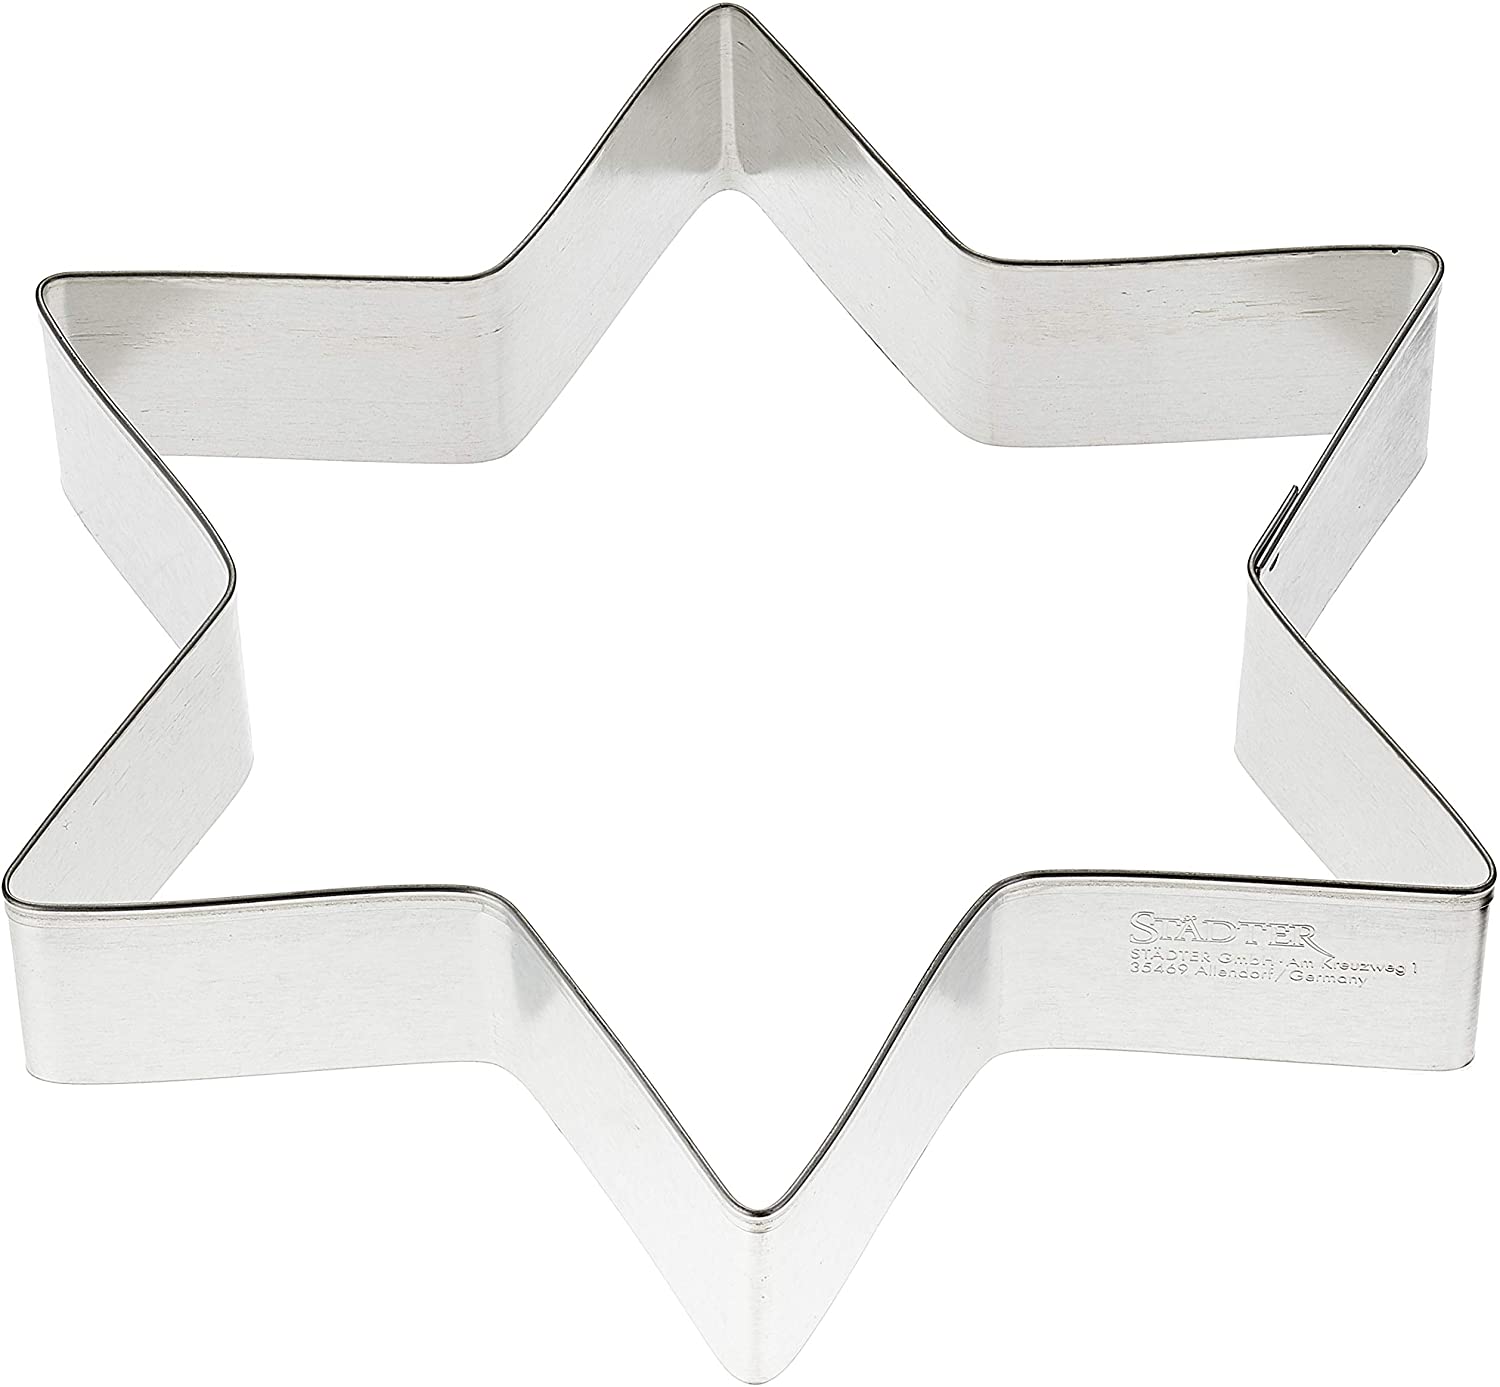 Städter Star diameter 18.0/3.0 cm high, tinplate, silver, 18 x 18 x 3 cm